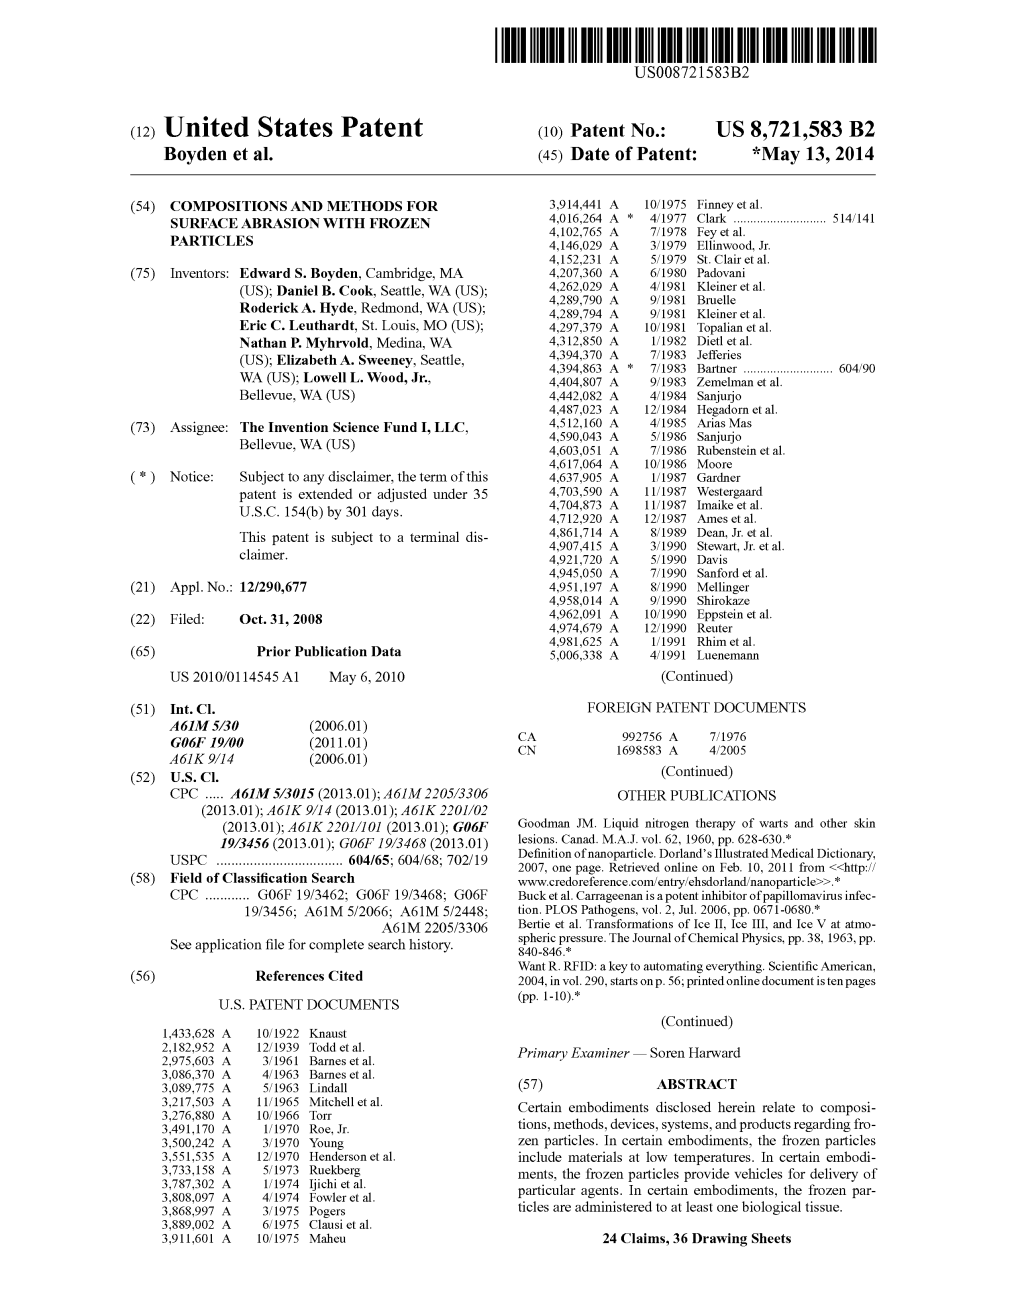 United States Patent (10) Patent No.: US 8,721,583 B2 Boyden Et Al